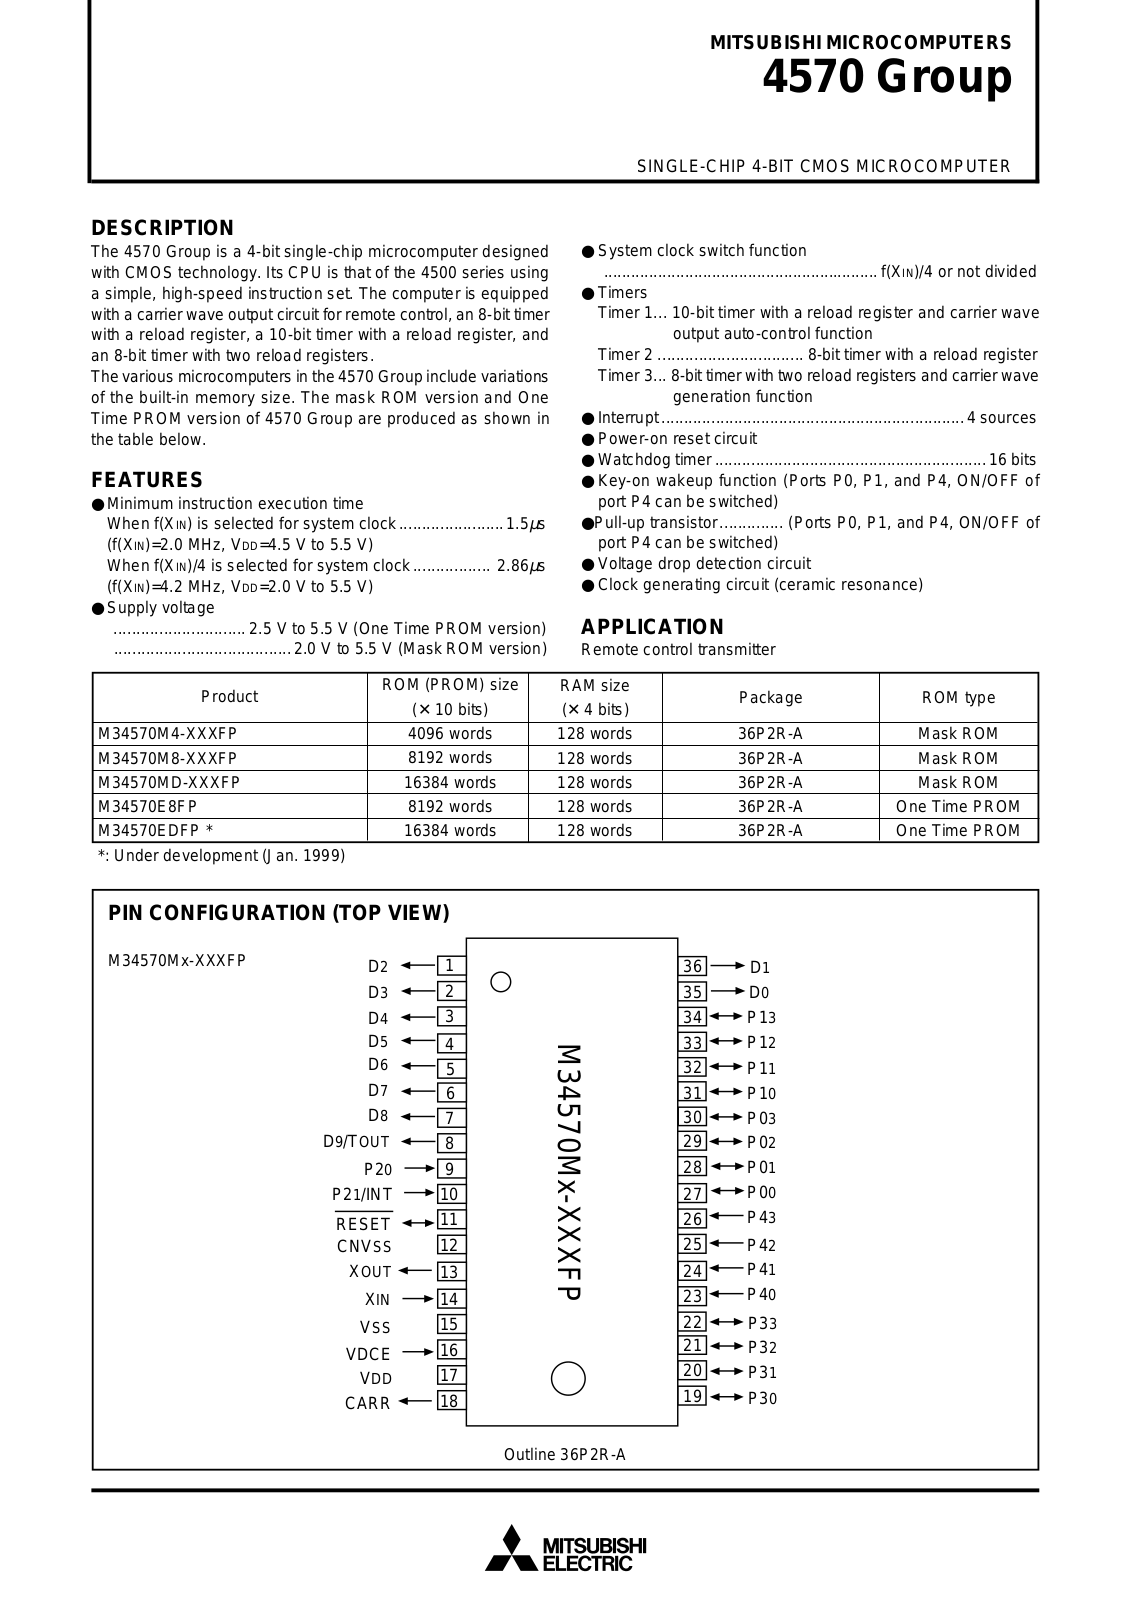 Mitsubishi M34570M4-XXXFP, M34570EDFP, M34570E8FP, M34570MD-XXXFP, M34570M8-XXXFP Datasheet